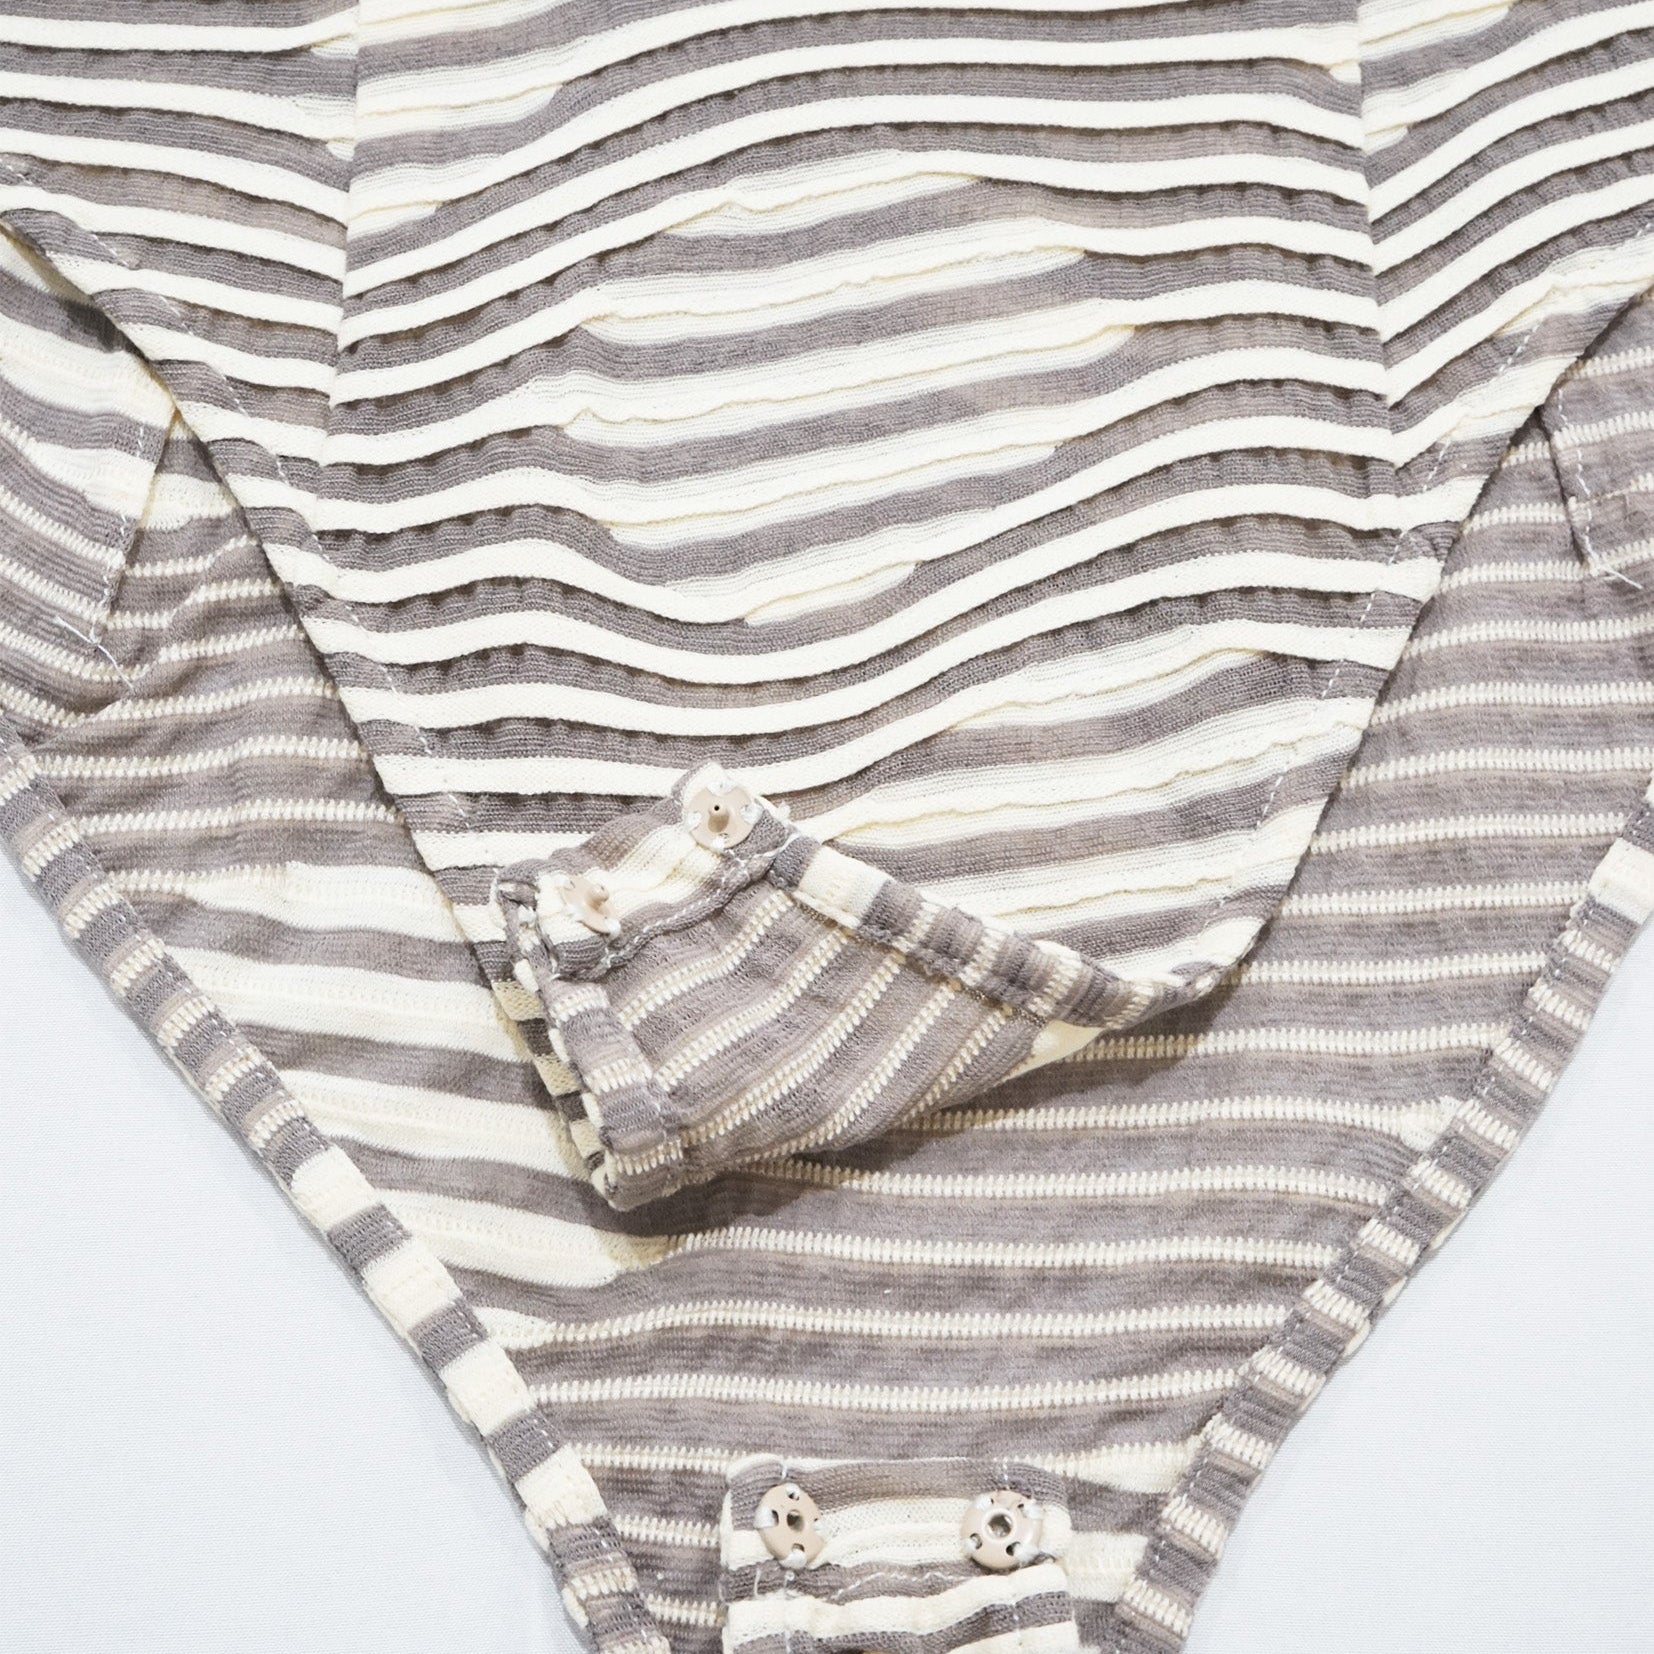 Striped low cut round neck see-through bodysuit in cream & khaki